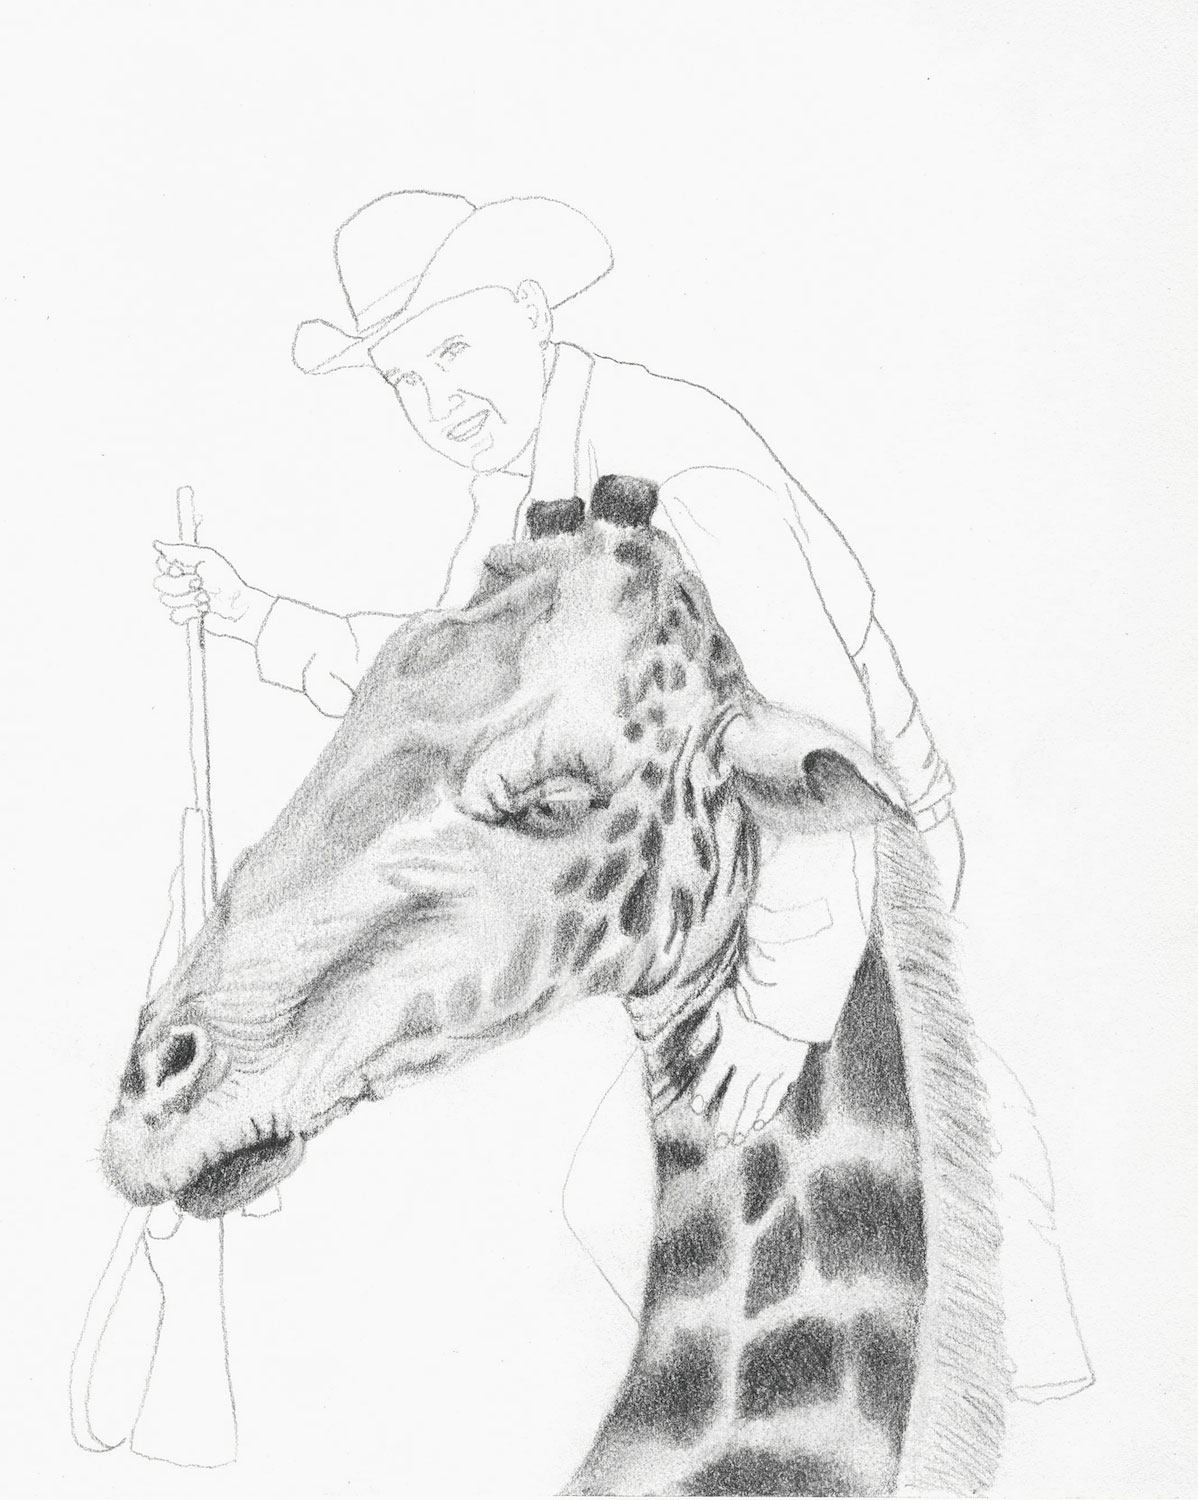 Jackie Skrzynski, Giraffe, 2013. Pencil, 9 x 7.75 in.